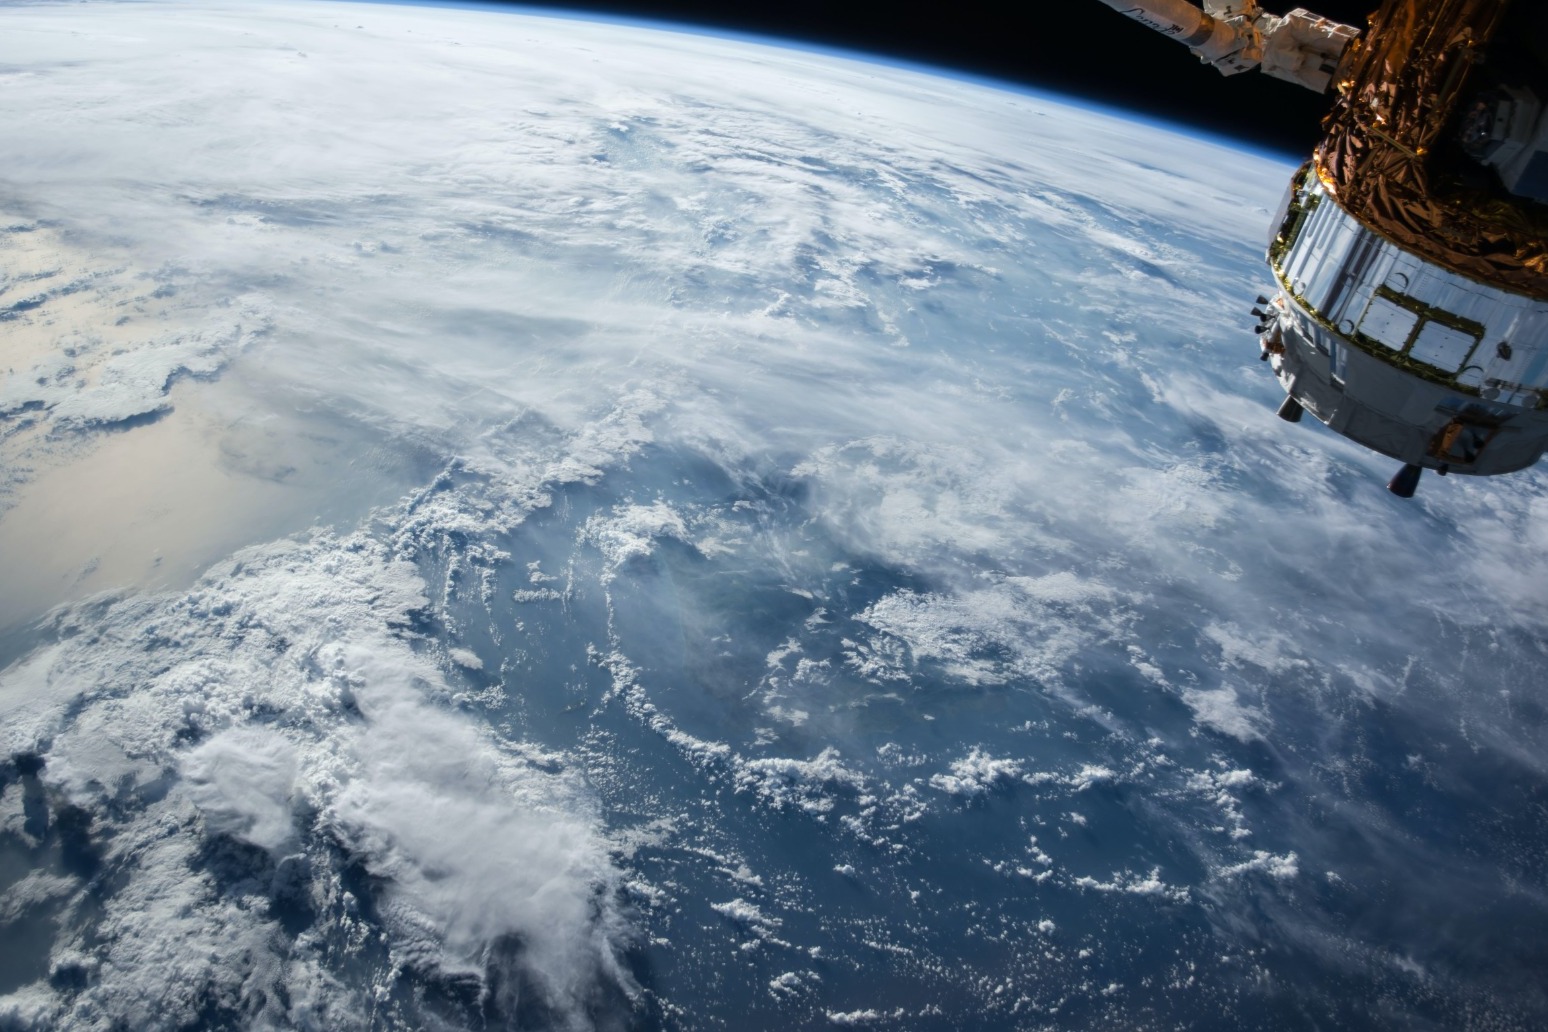 Amazon founder Jeff Bezos and Blue Origin crew reach space 